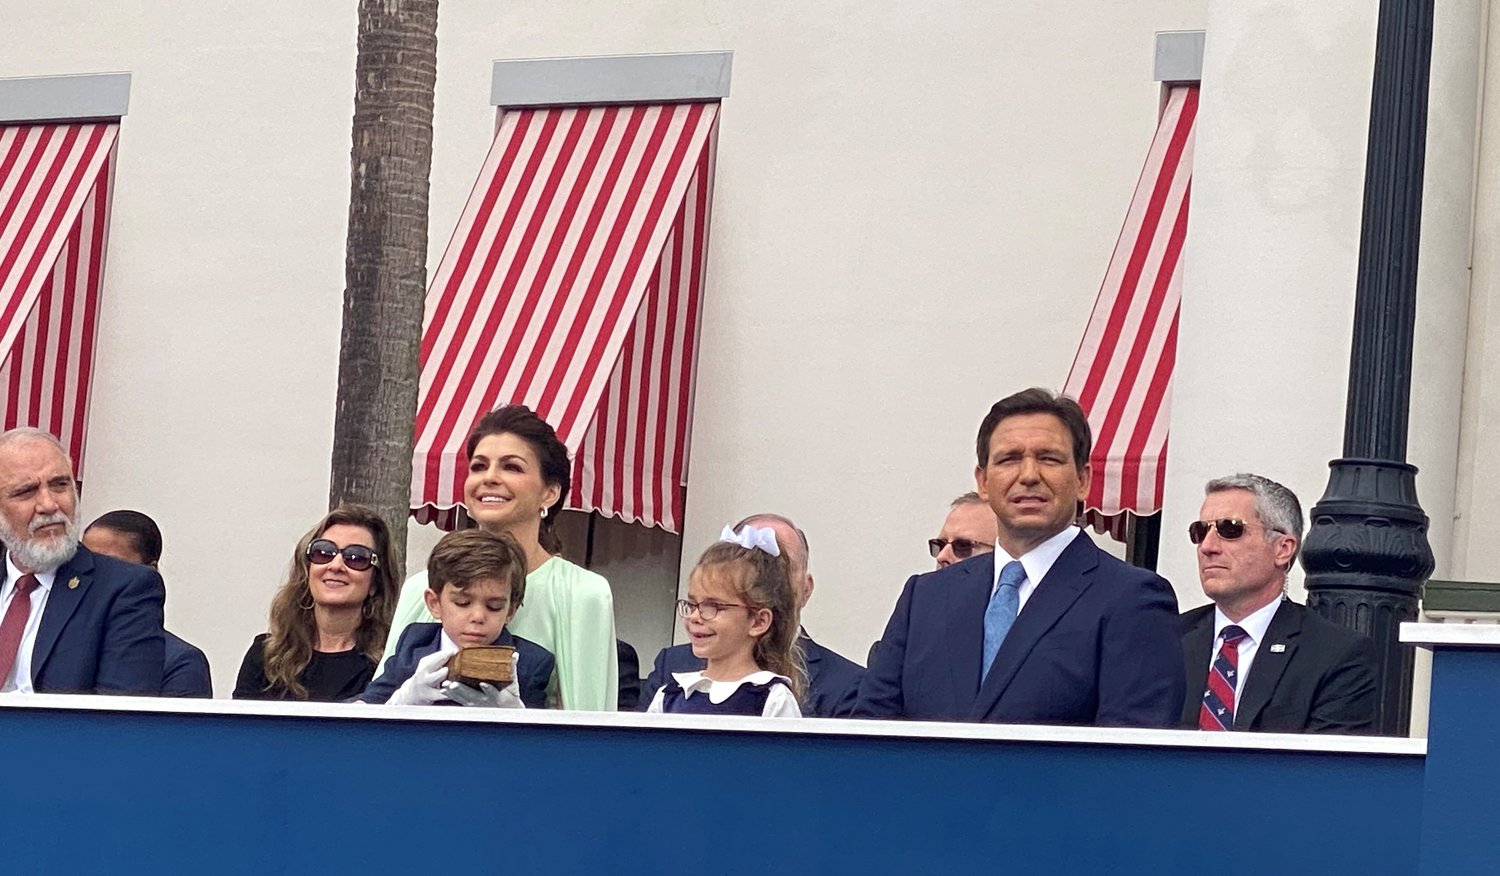 First Lady Casey DeSantis, Mason, Madison and Gov. Ron DeSantis at the inauguration.